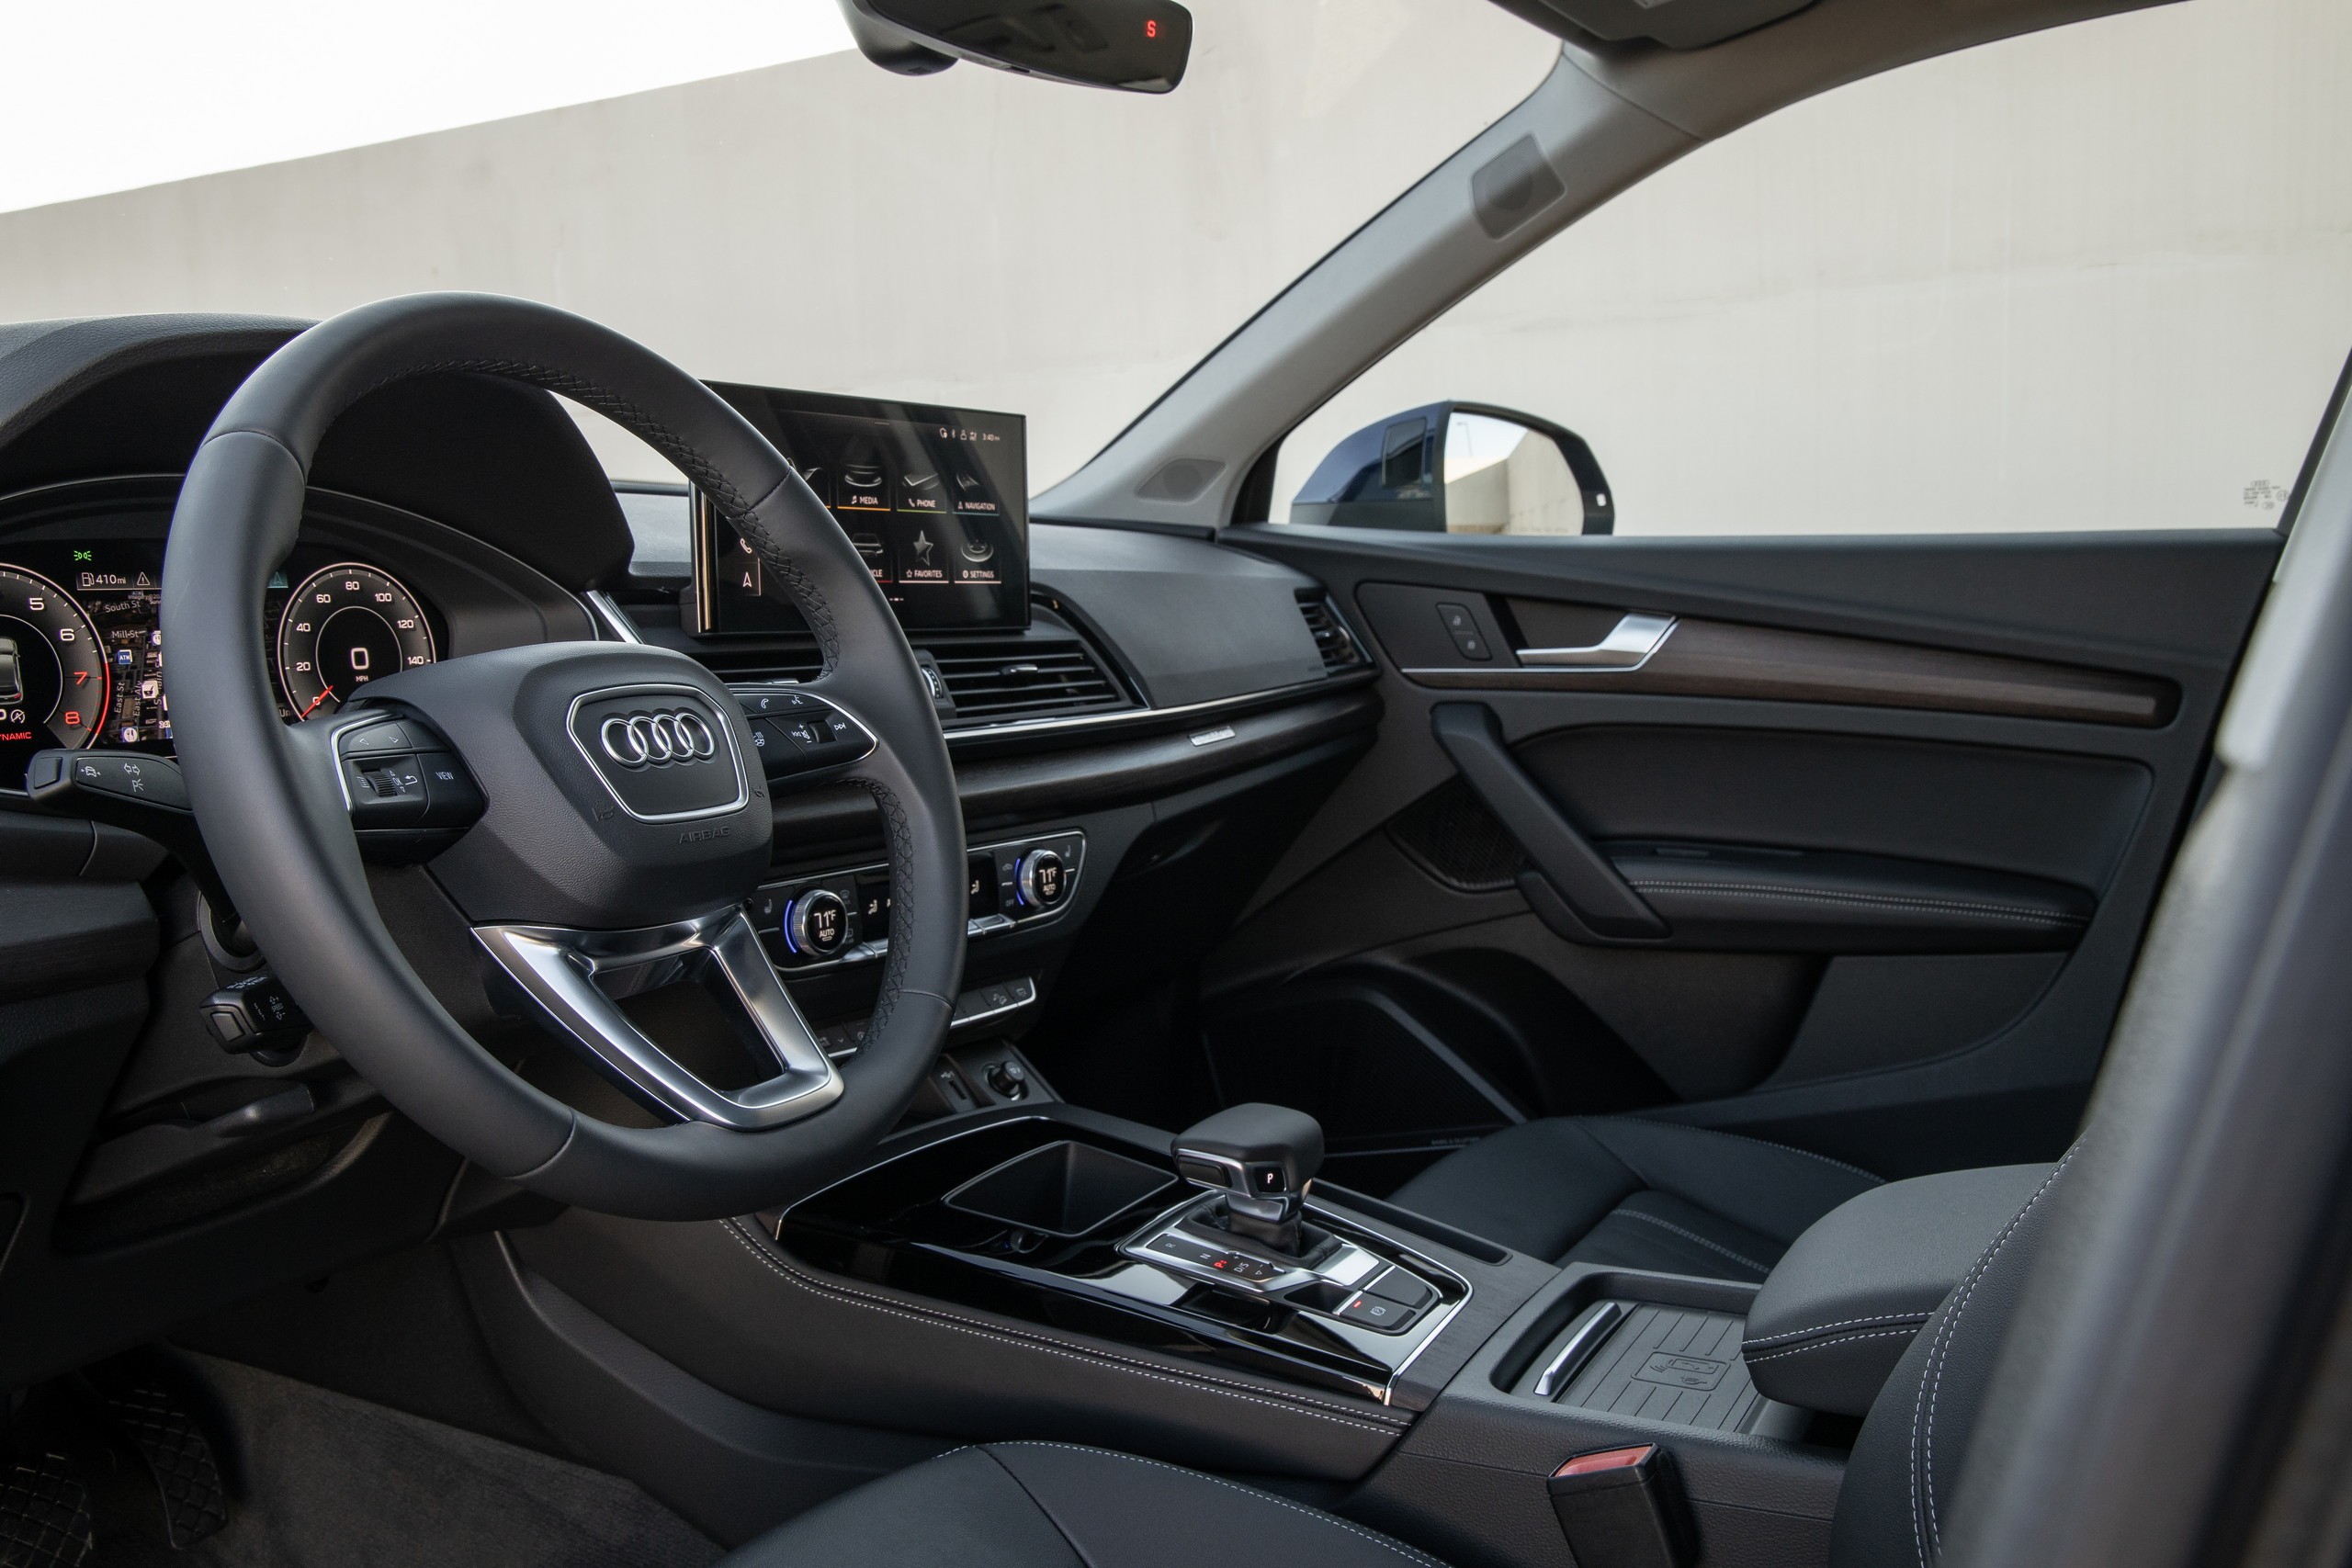 Audi Recall Passenger Seat Issue Alert & Resolution